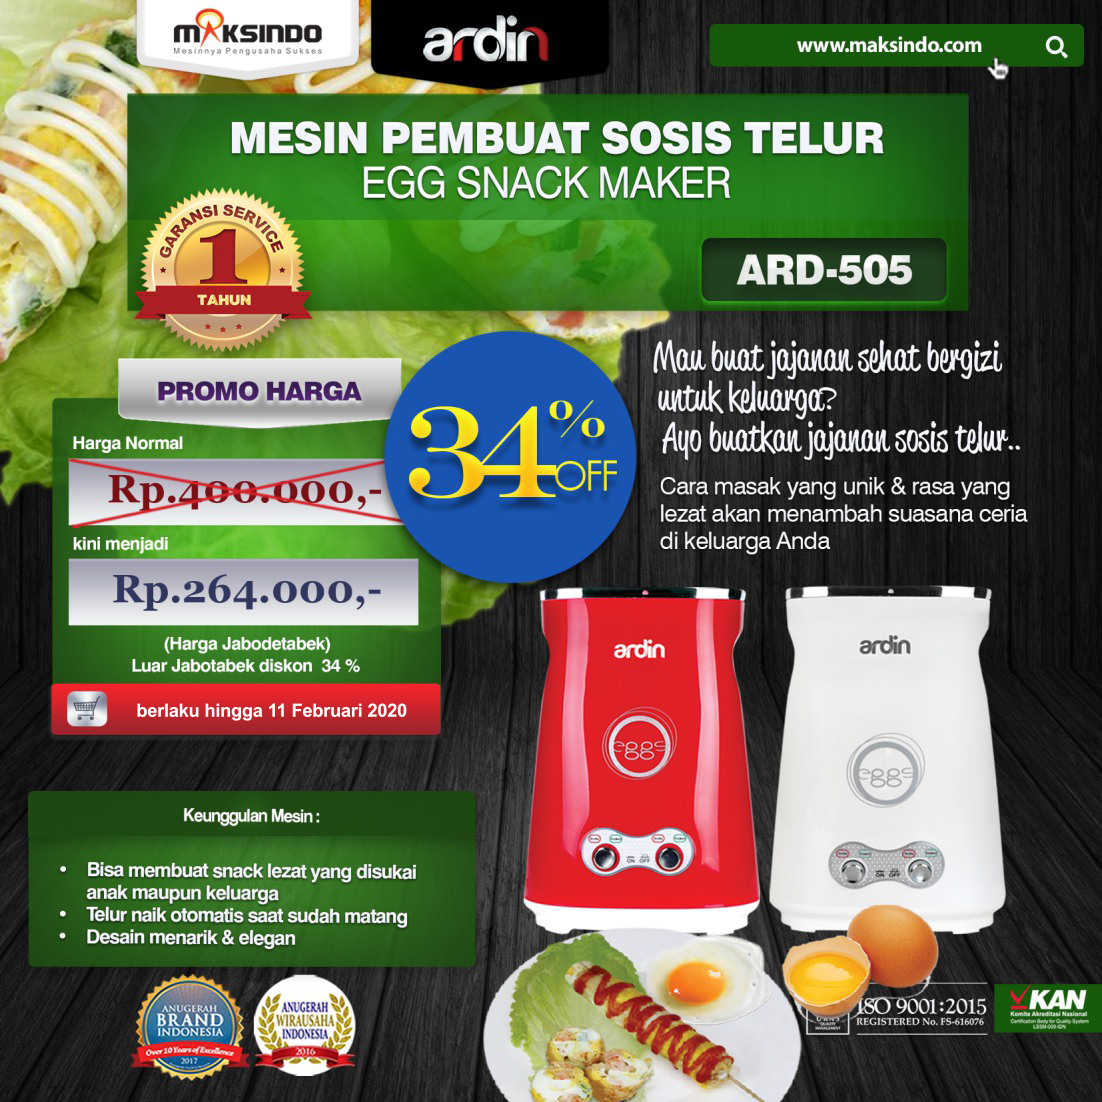 Jual Mesin Sosis Telur 2 Lubang ARDIN ARD-505 di Tangerang